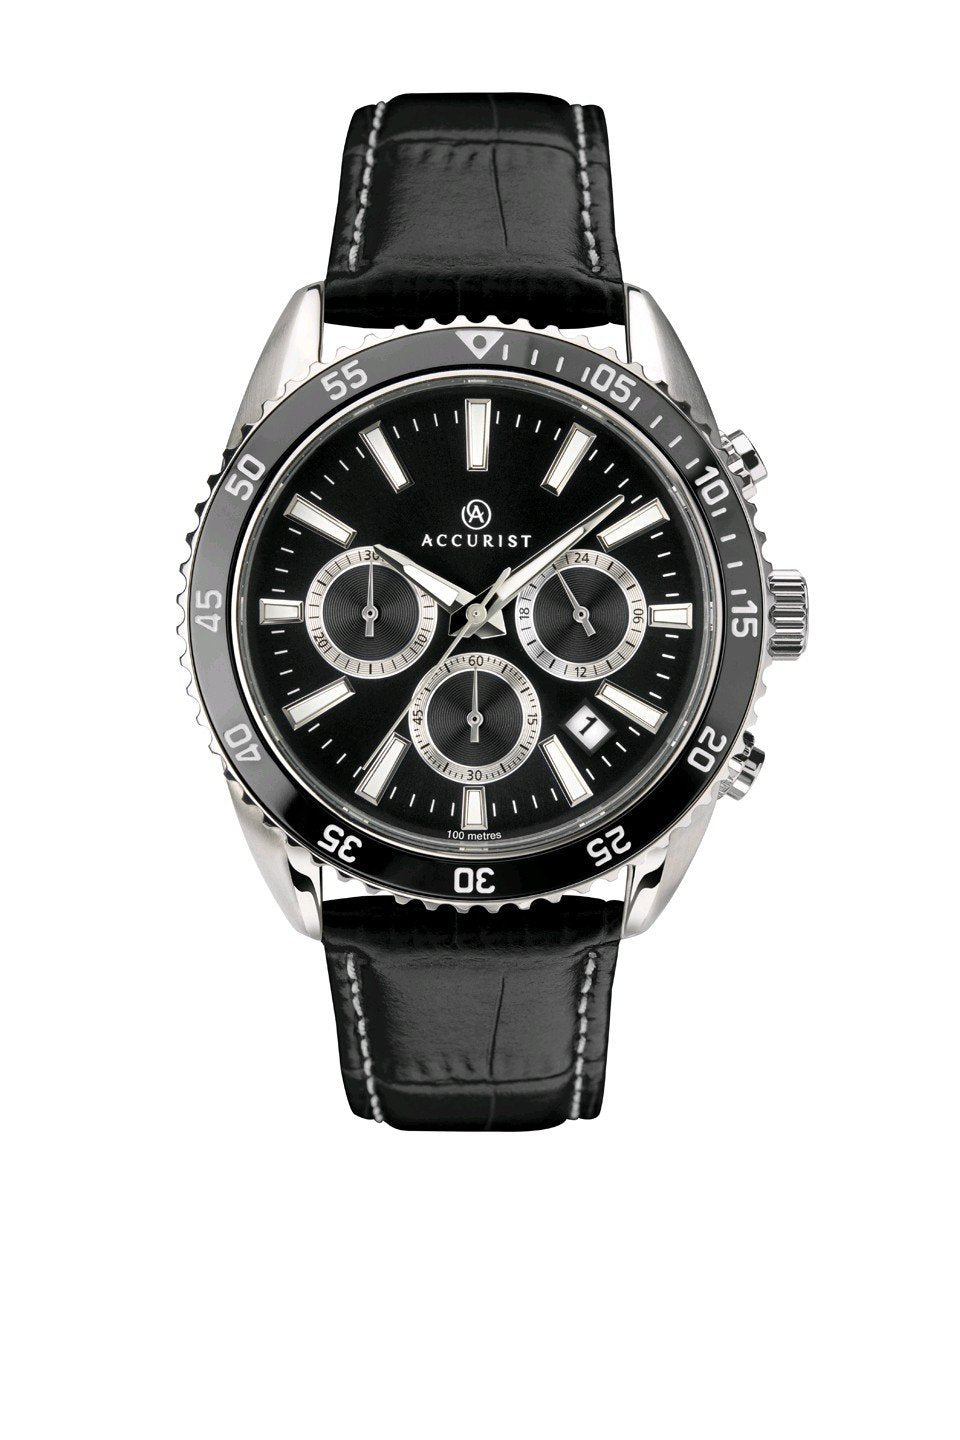 Accurist Men's Chronograph Watch 7229 Watches ACCURIST 